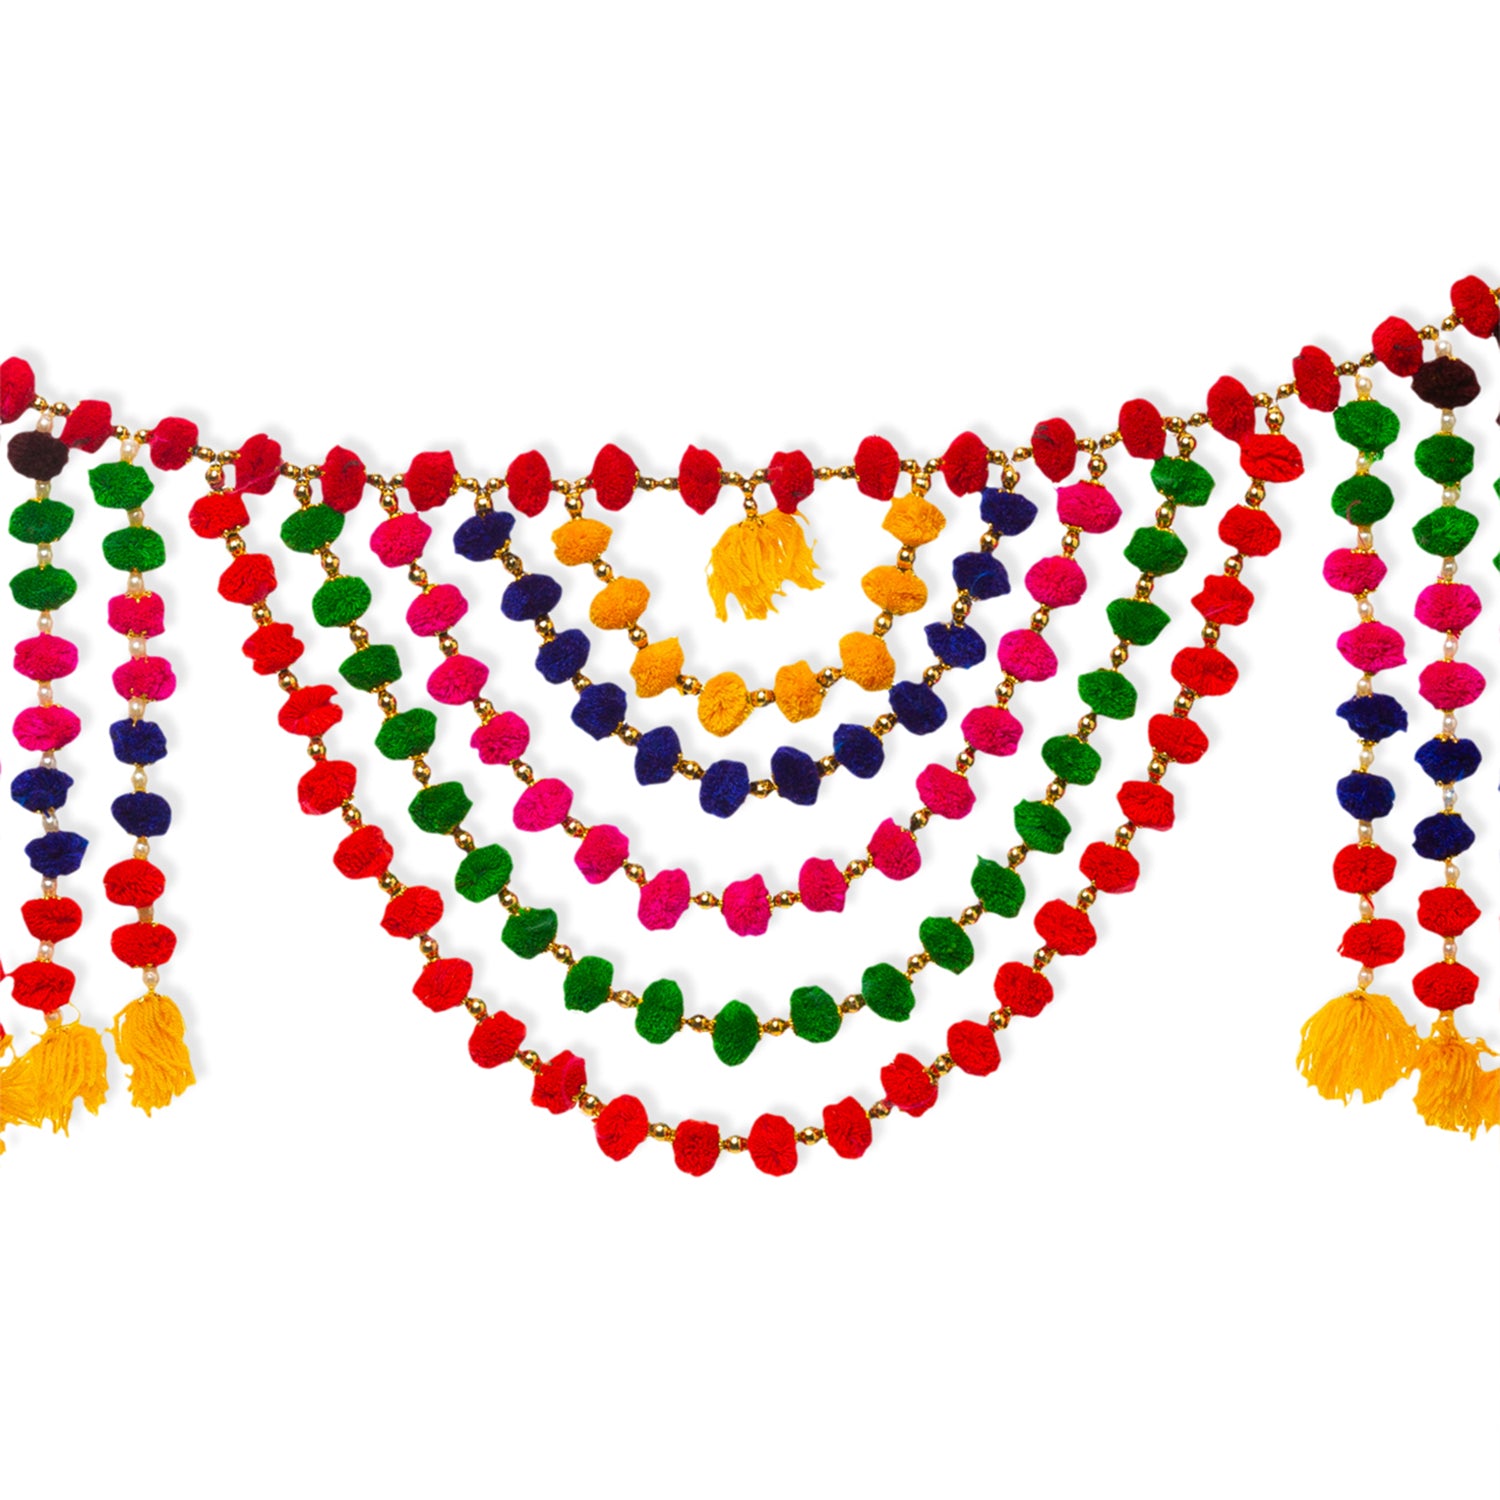 Digital Dress Room Toran For Door Hangings Diwali Decoration Heavy Fancy Green, Red, Pink, Yellow, Blue Pom Pom balls with Latkans